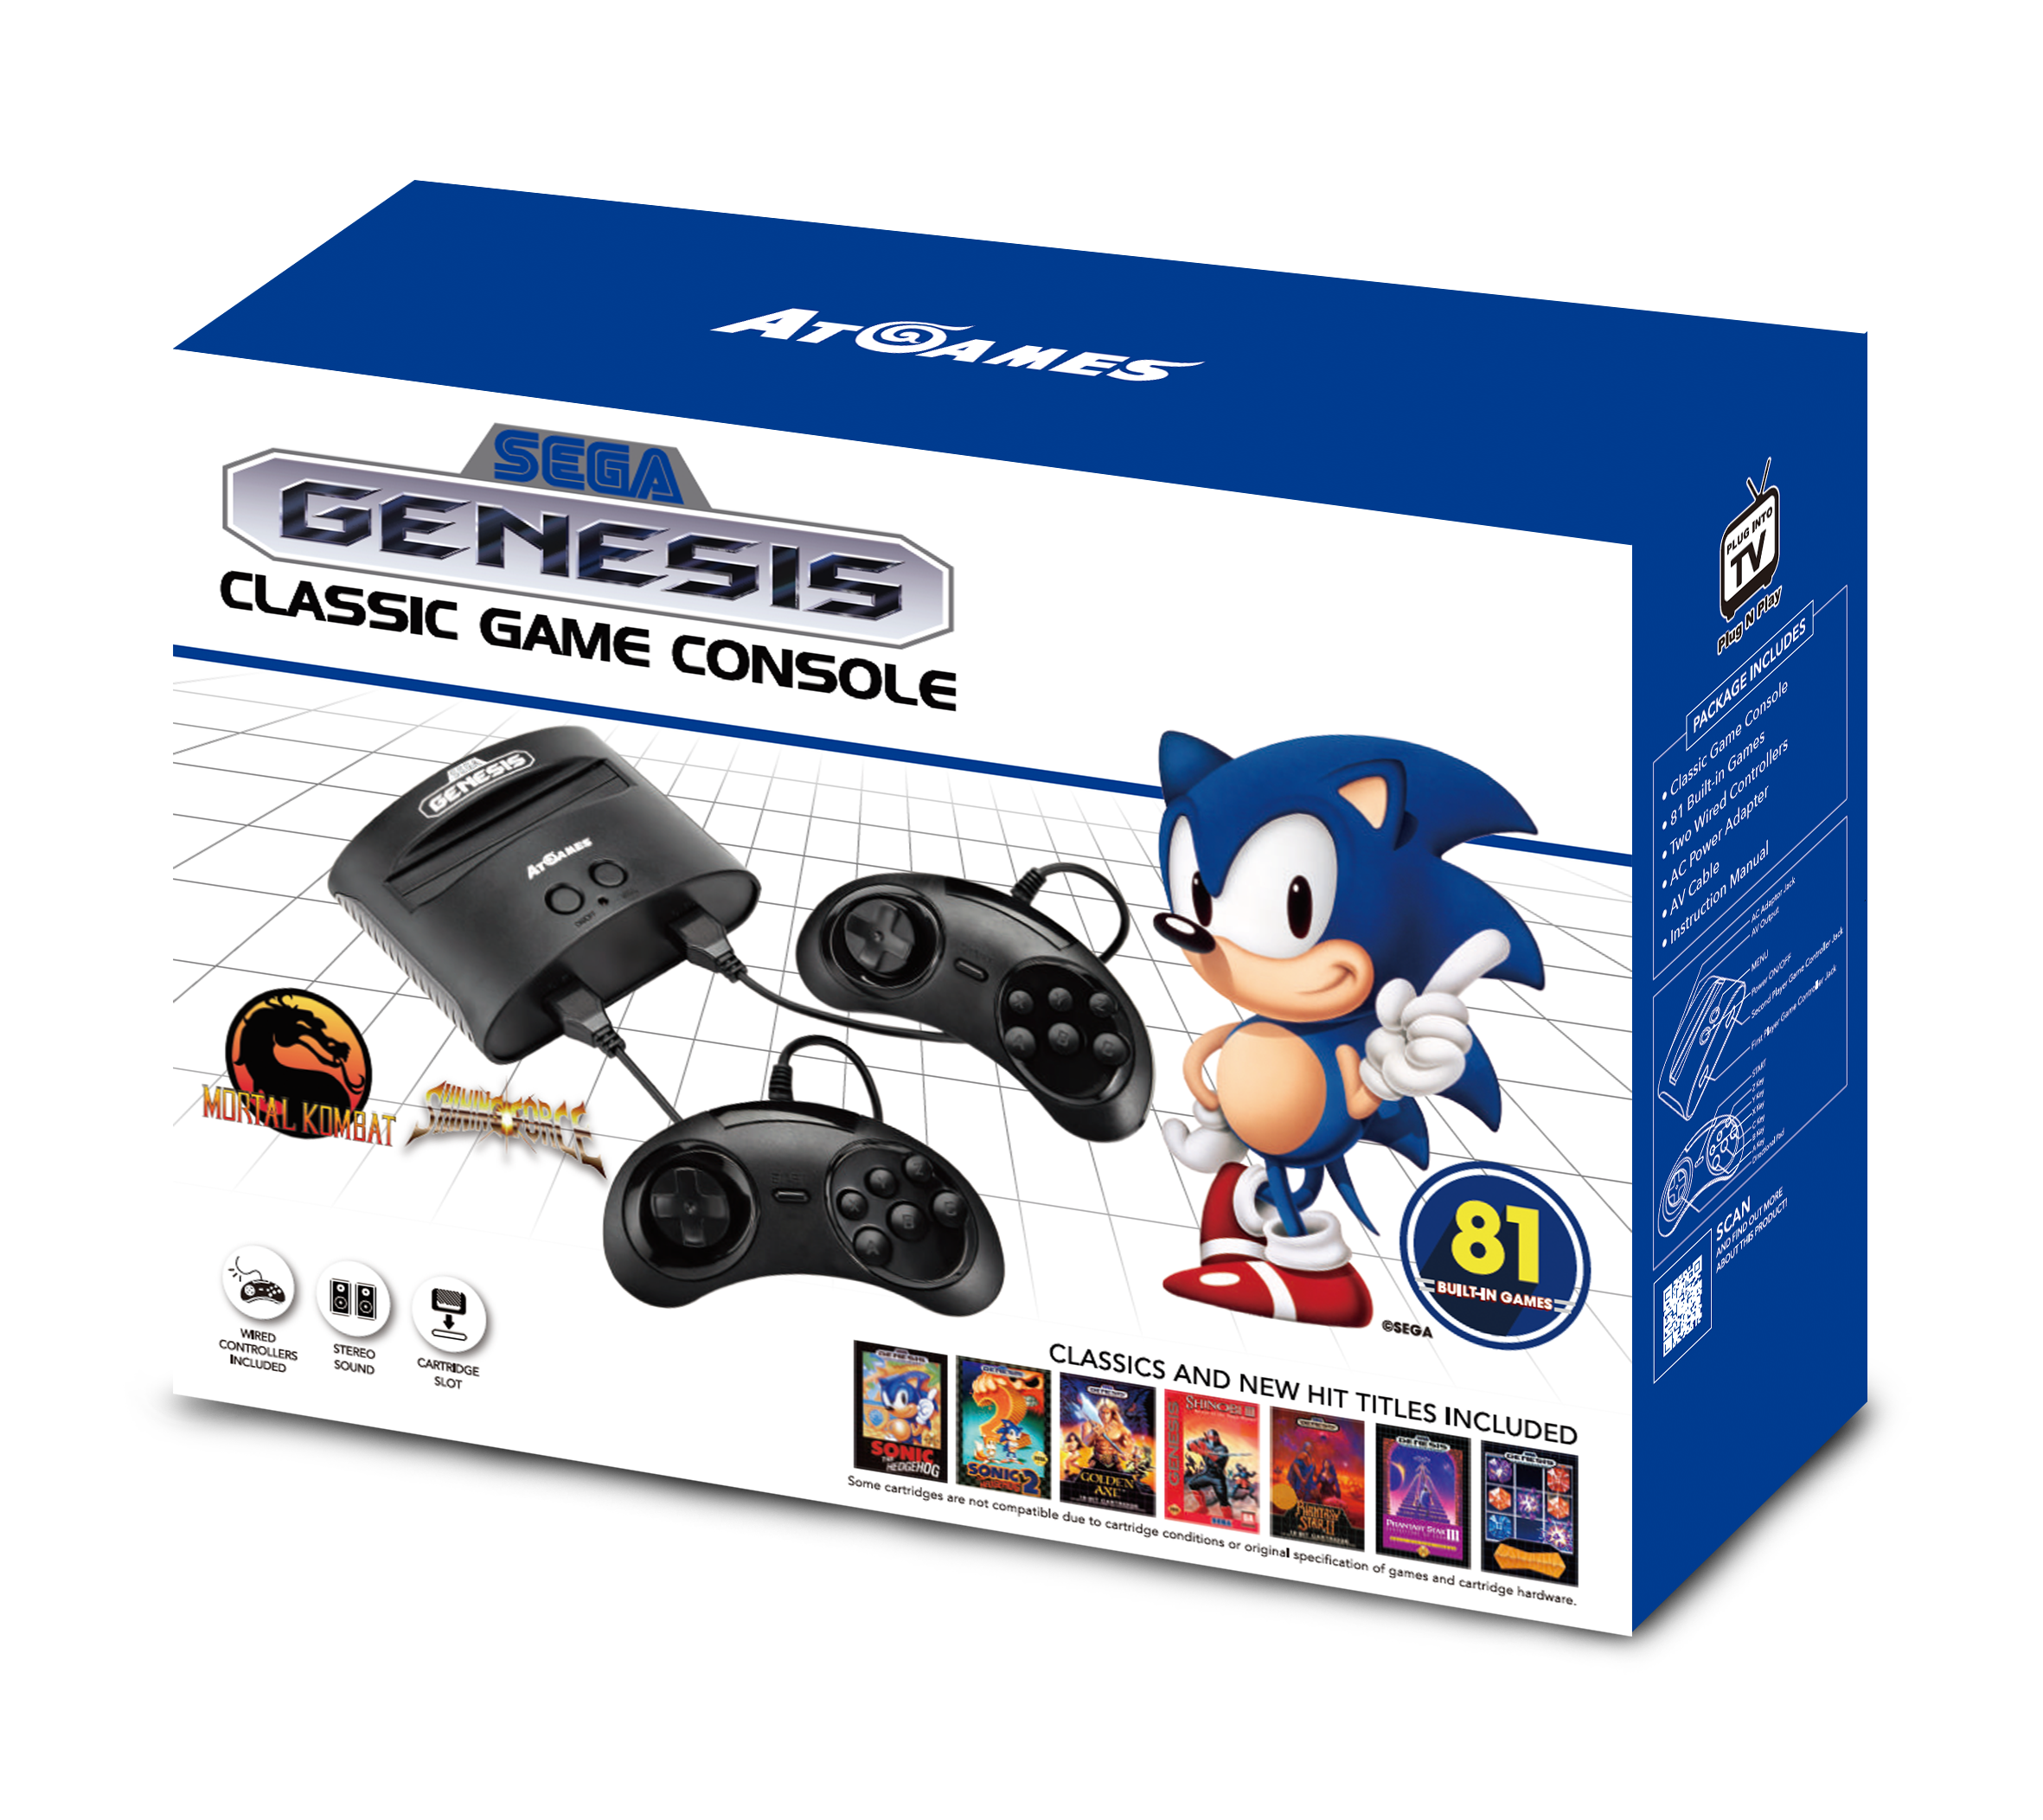 Sega Genesis Classic Game Console with 81 Classic Games Built-in, Black, FB8280C, - image 1 of 3